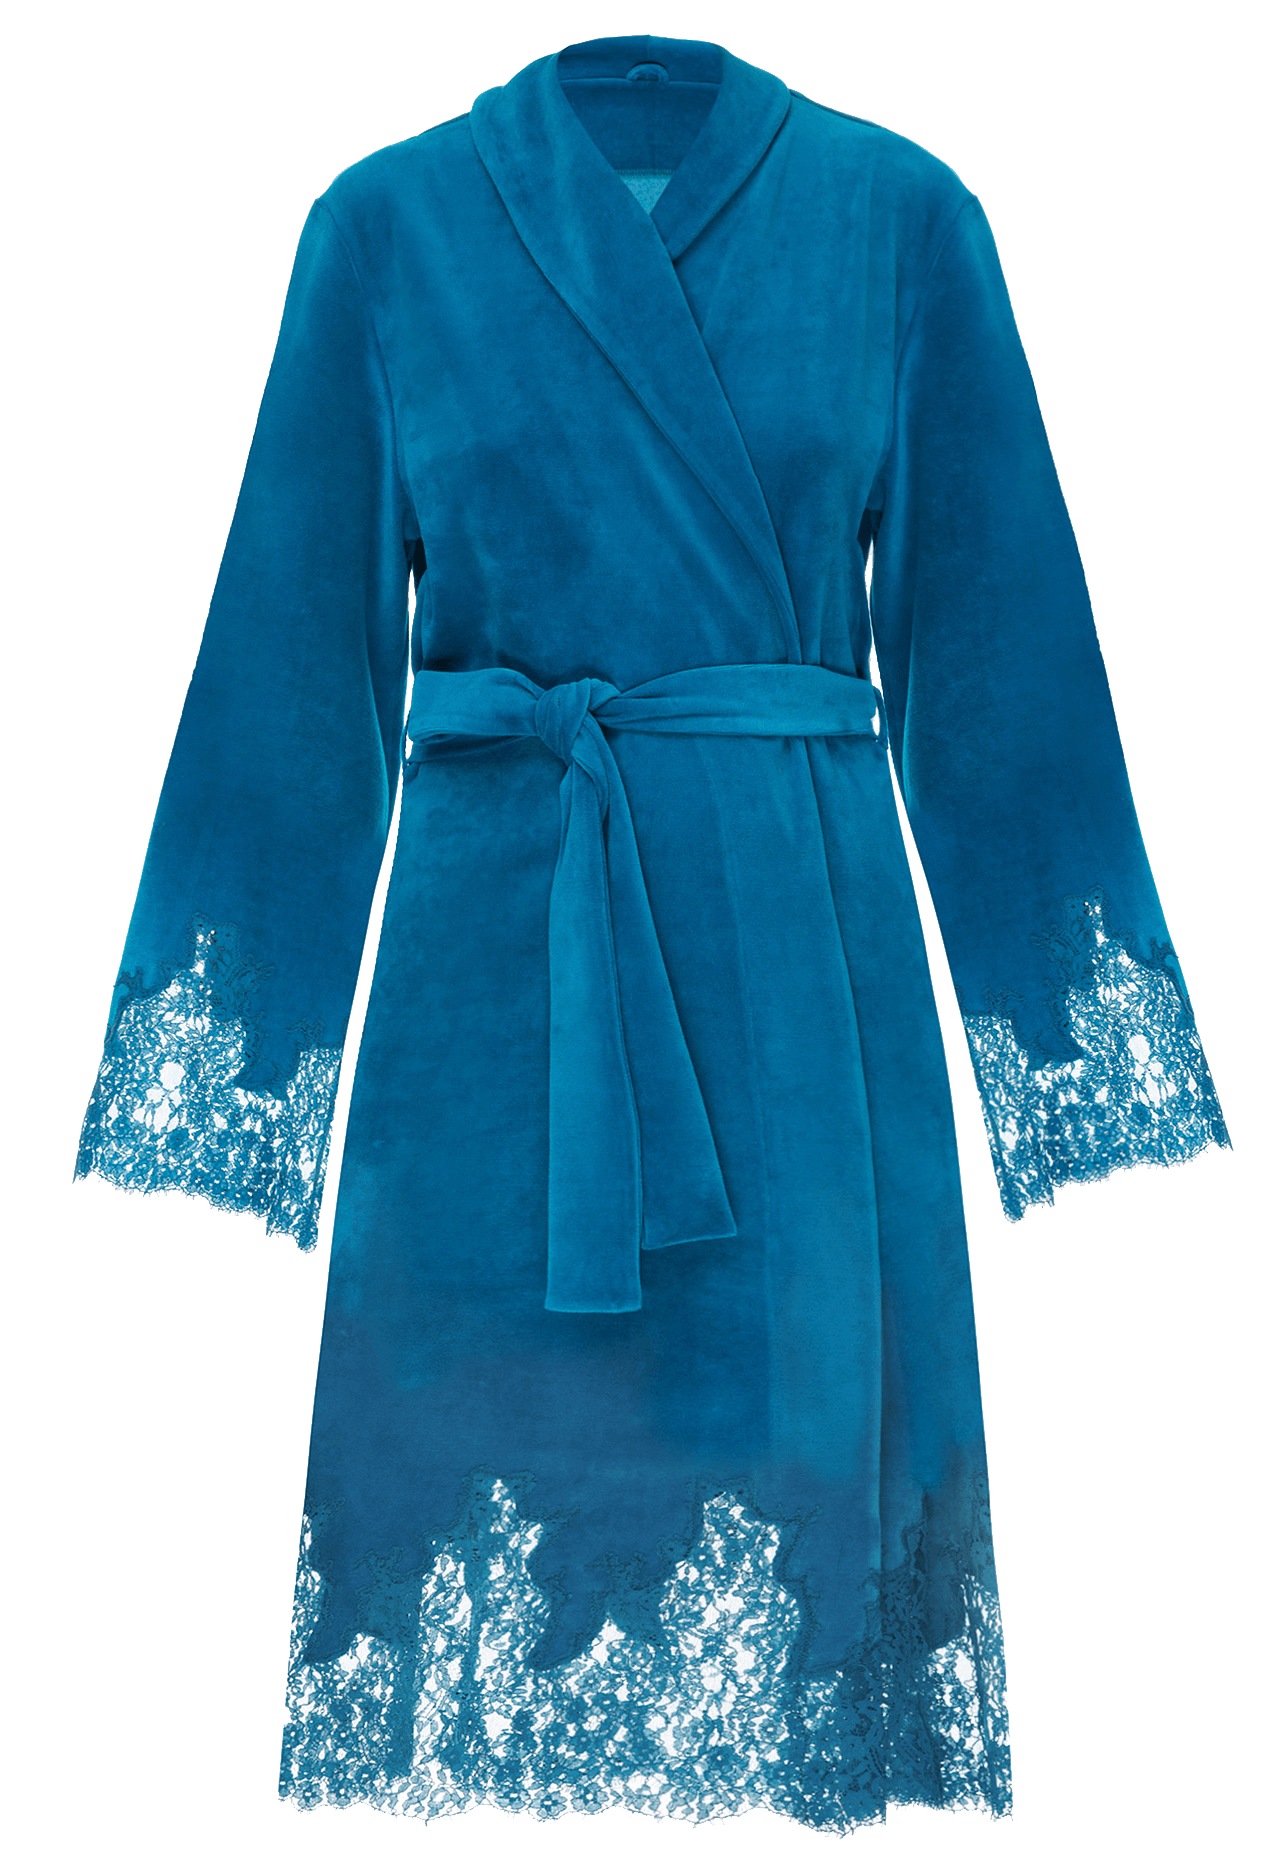 Халат короткий Suavite robe-short-slp263-sv-blu-marielle-w